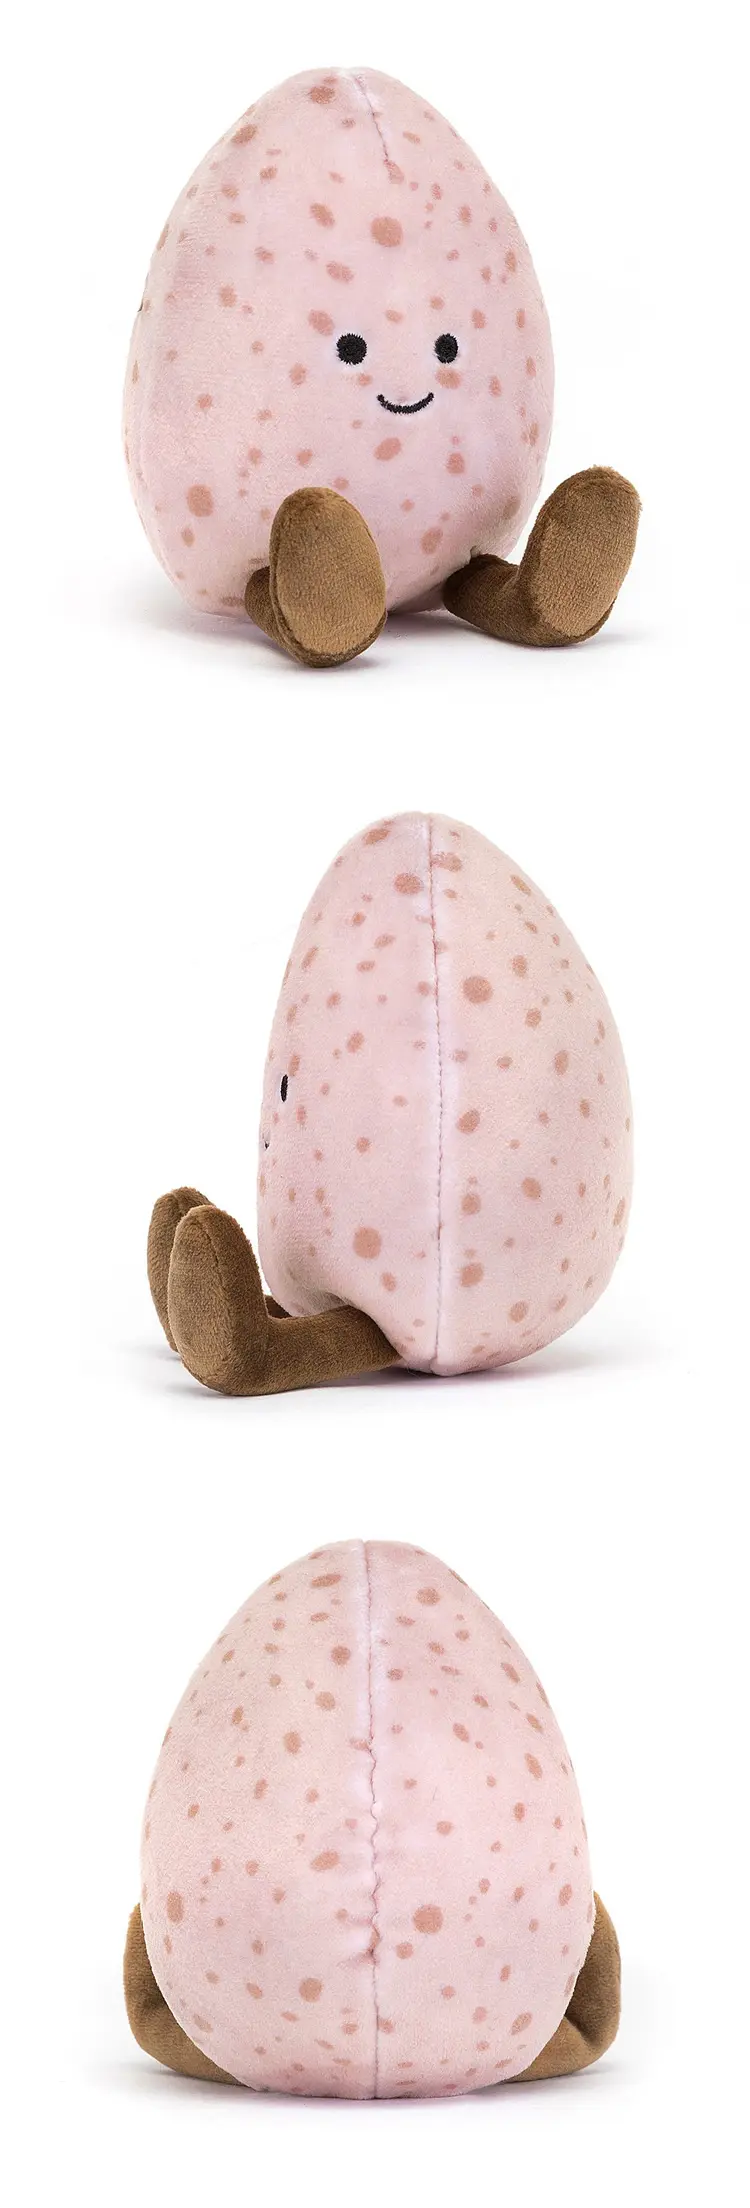 JellyCat Eggsquisite Pink Egg 粉紅雞蛋公仔